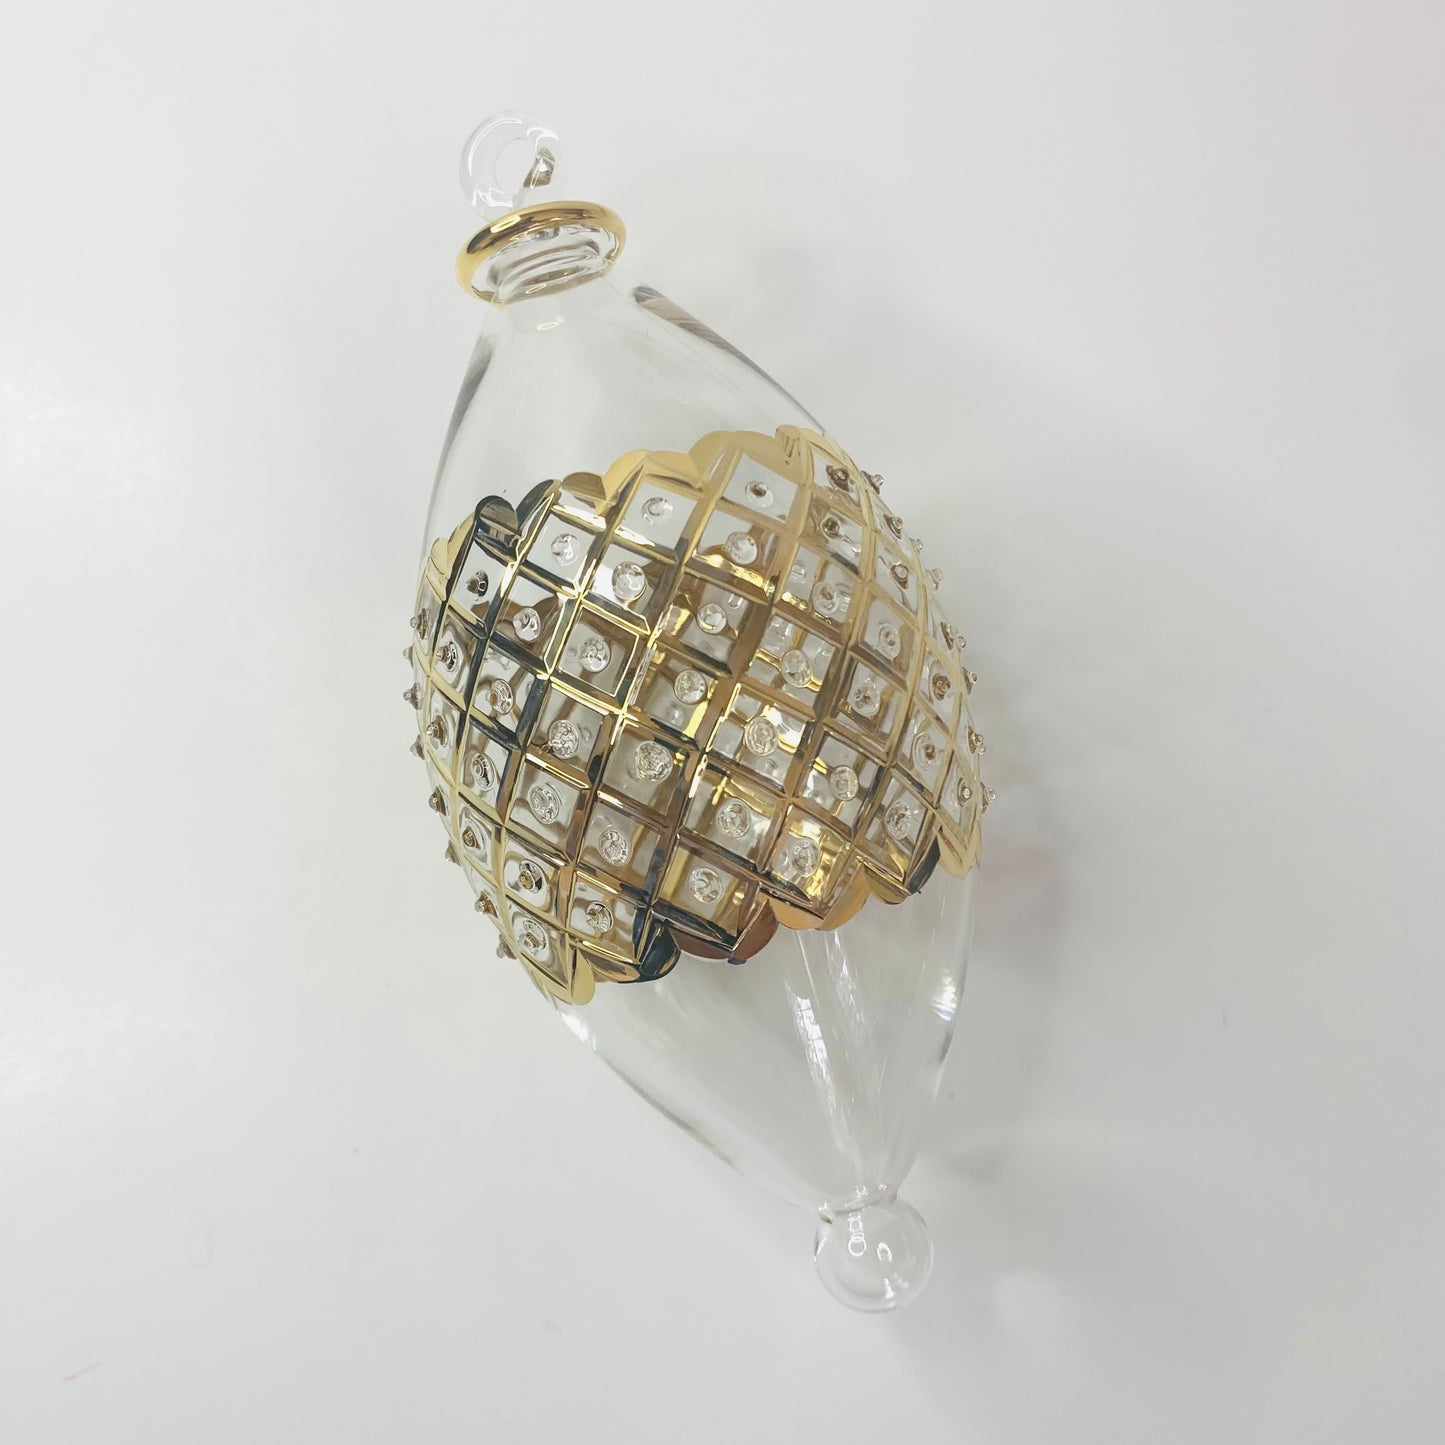 Blown Glass Oval Ornament - Gold Diamonds